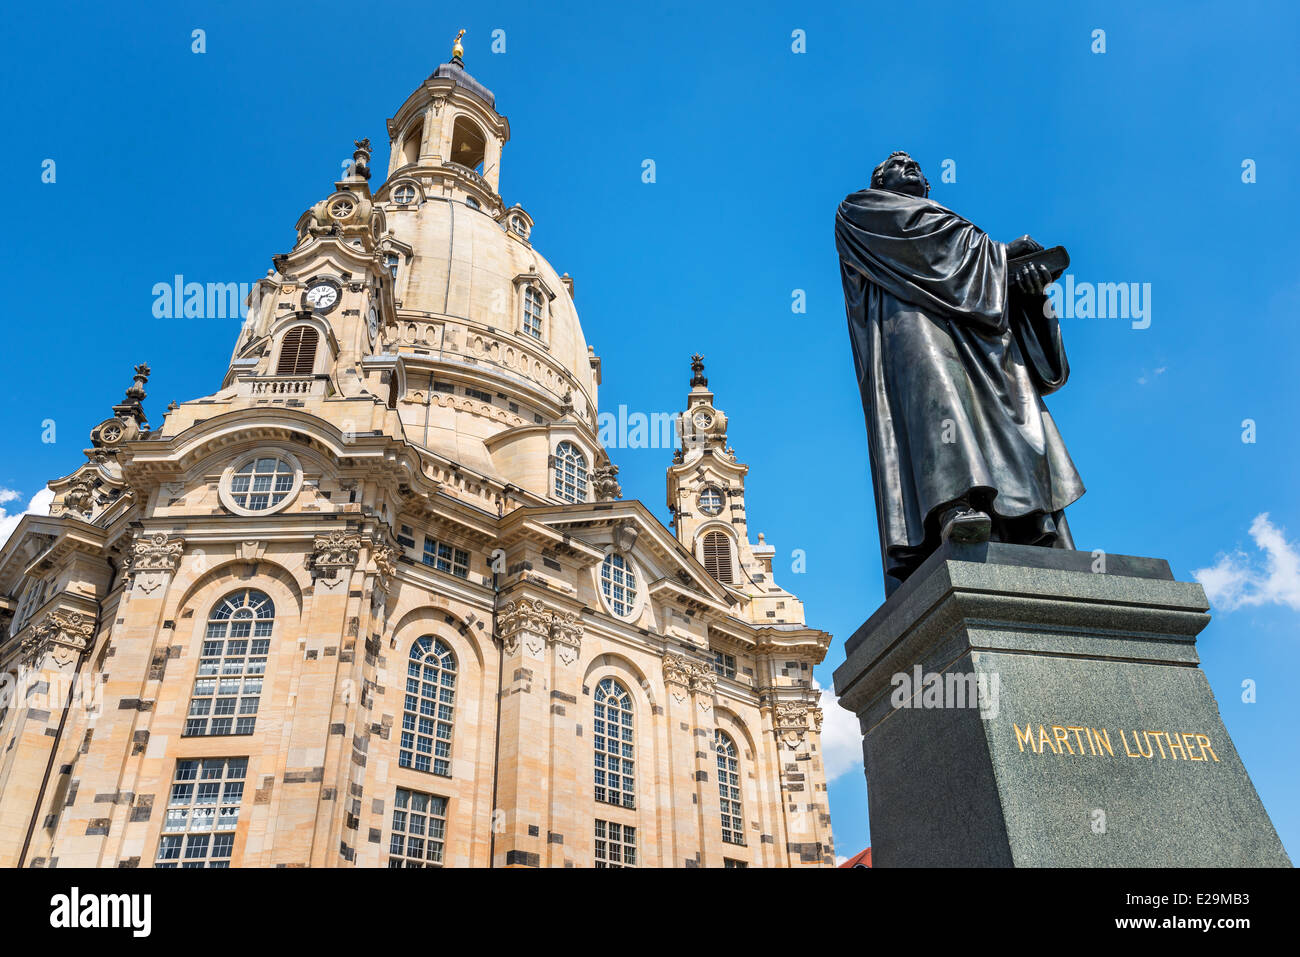 La Dresden Frauenkirche Luterana Iglesia de Nuestra Señora de Dresde, capital del estado alemán de Sajonia. A la estatua de la plaza de mercado. Foto de stock